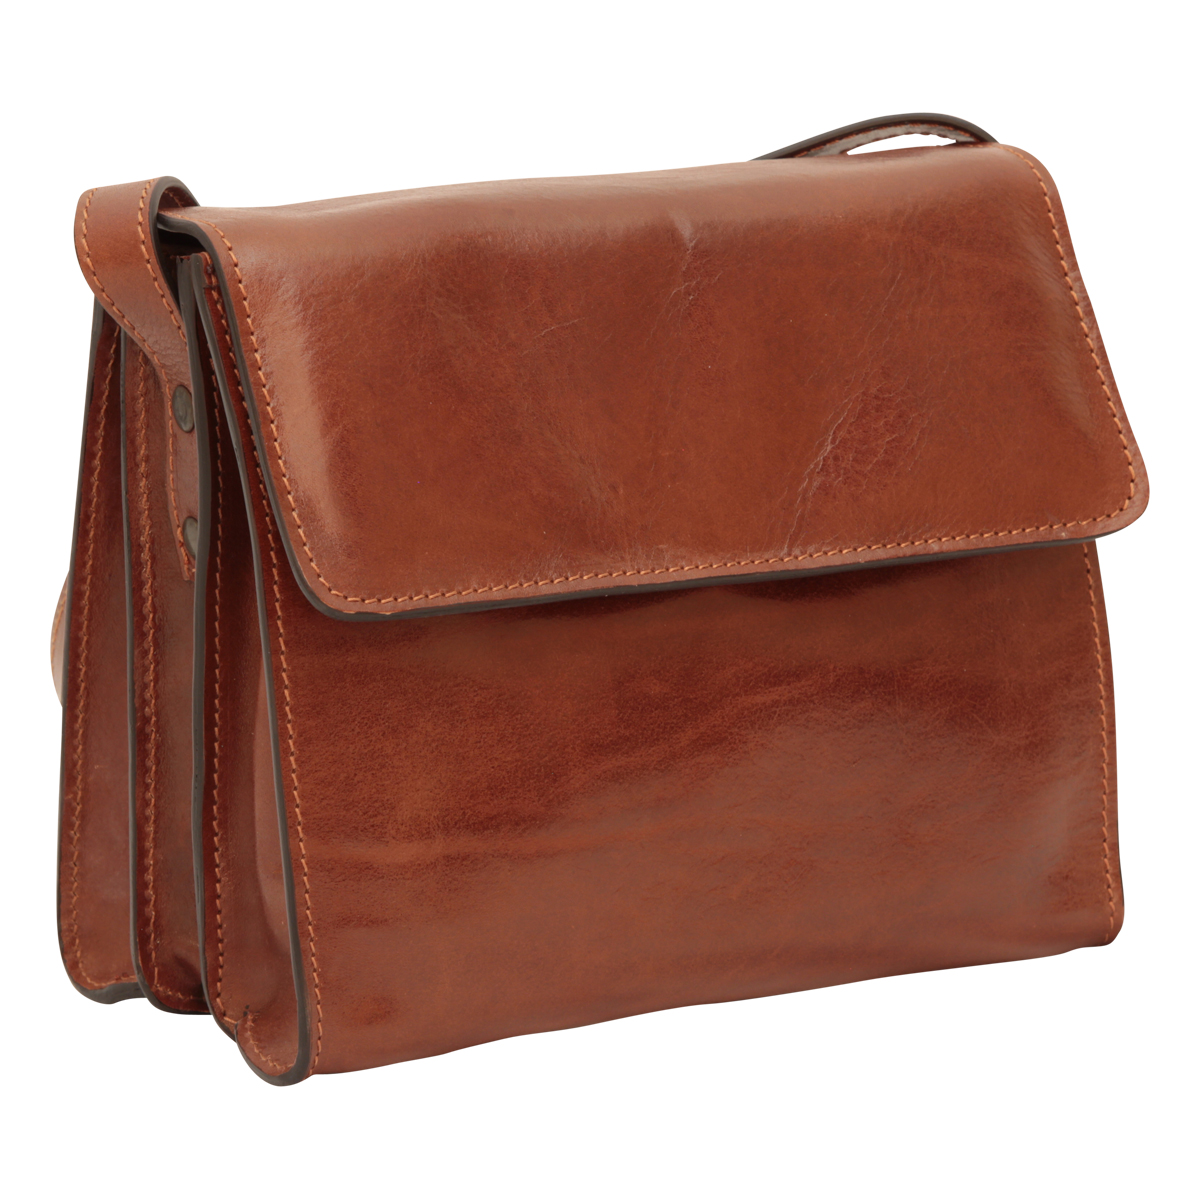 Full grain calfskin shoulder bag  | 209305MA US | Old Angler Firenze